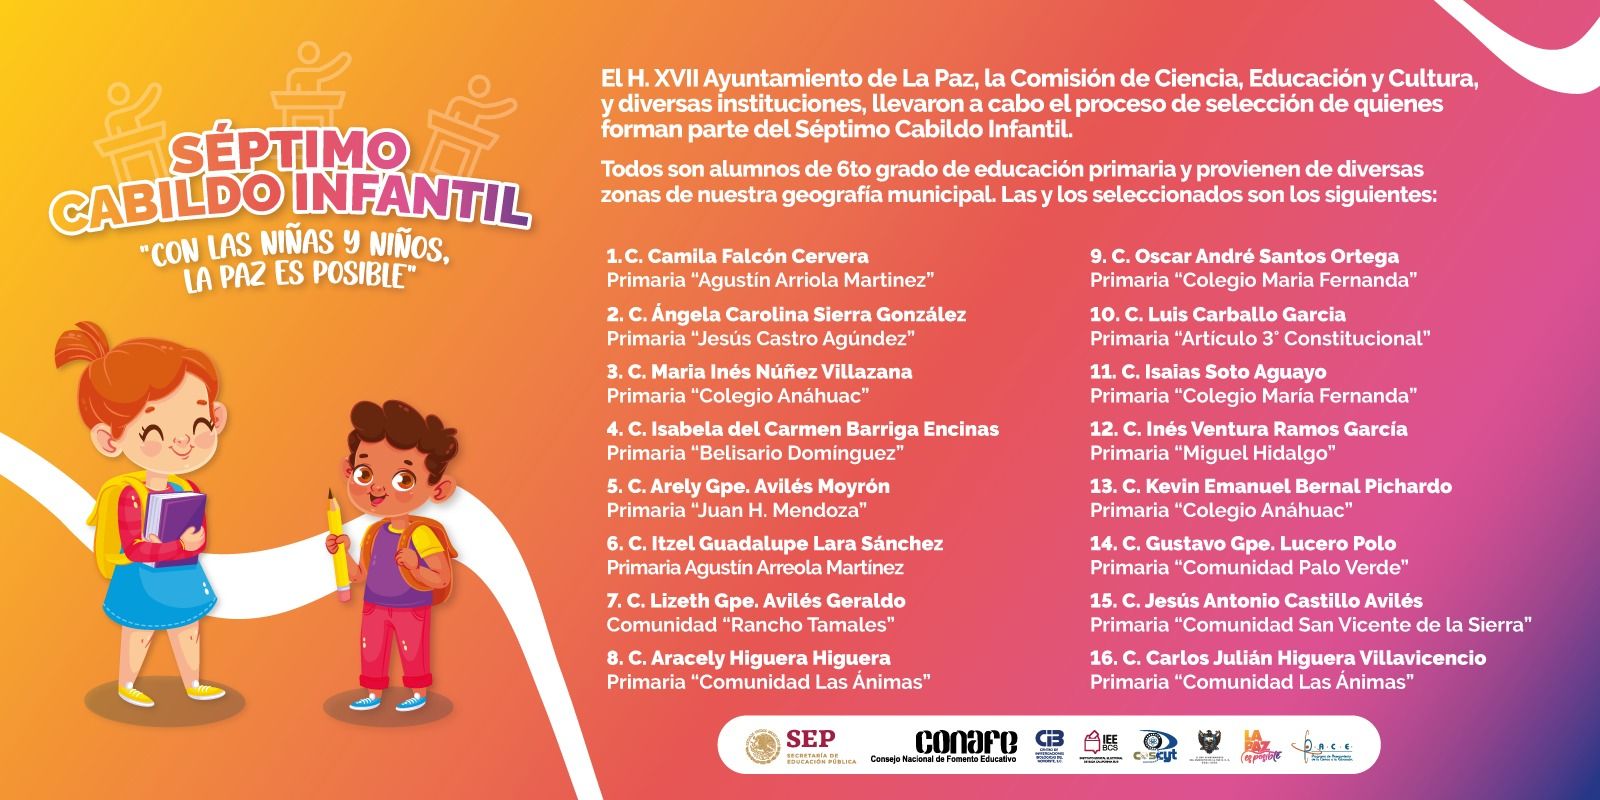 Eligen a integrantes del Séptimo Cabildo Infantil en La Paz